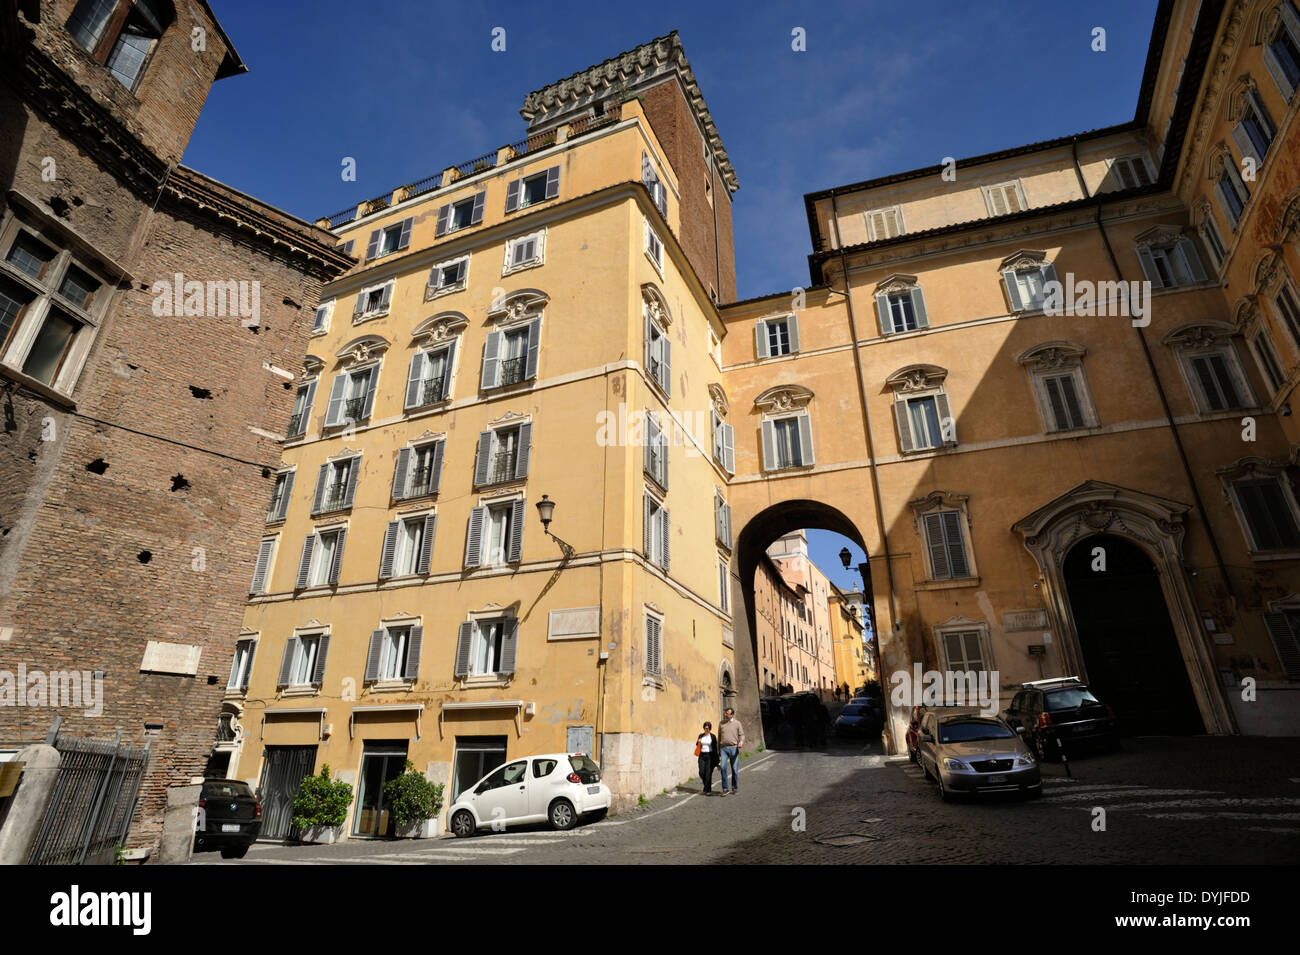 Italia, Roma, Piazza del Grillo, el Palazzo del Grillo Fotografía de stock  - Alamy